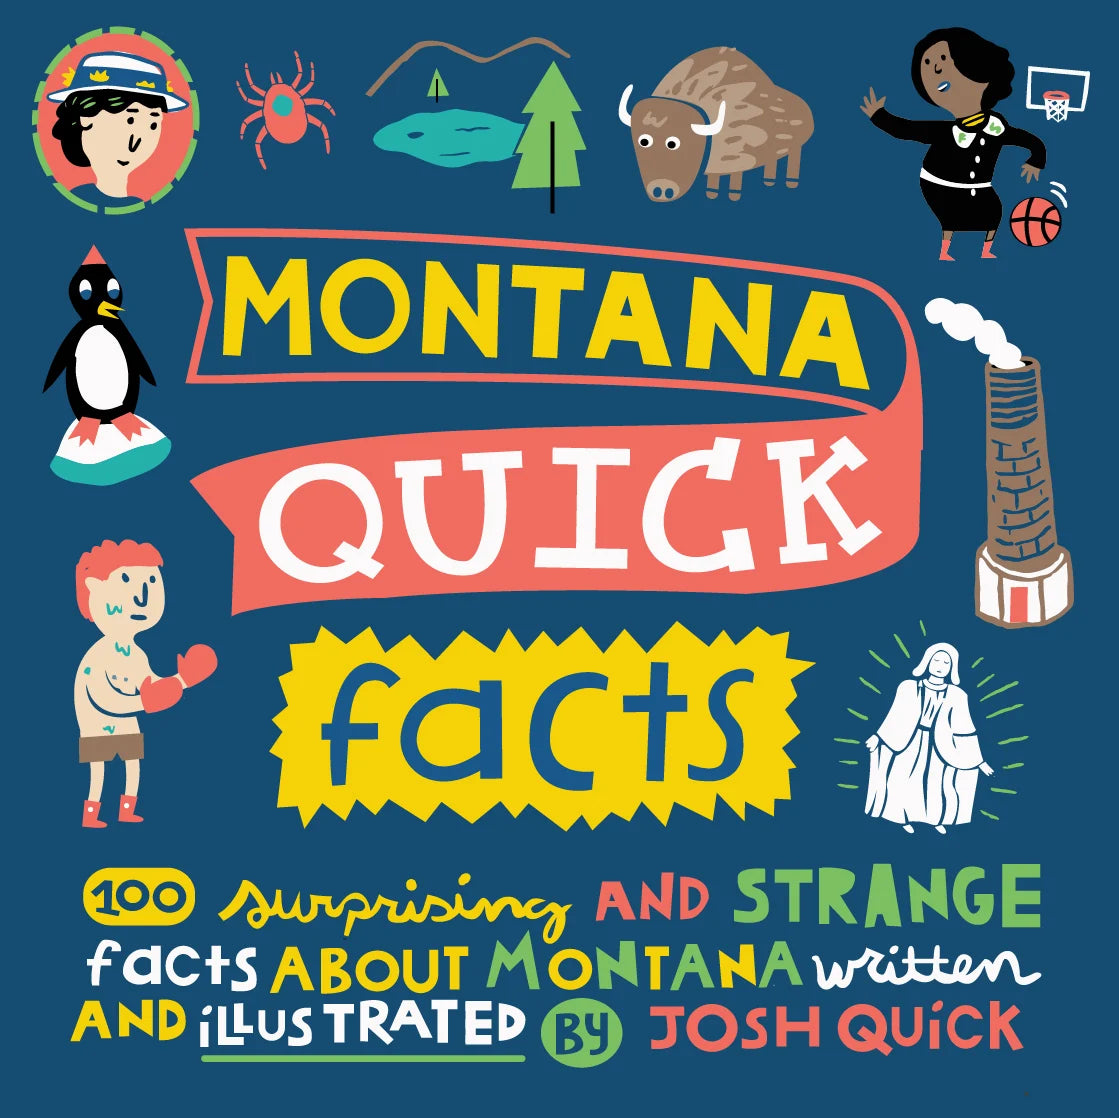 Montana Quick Facts